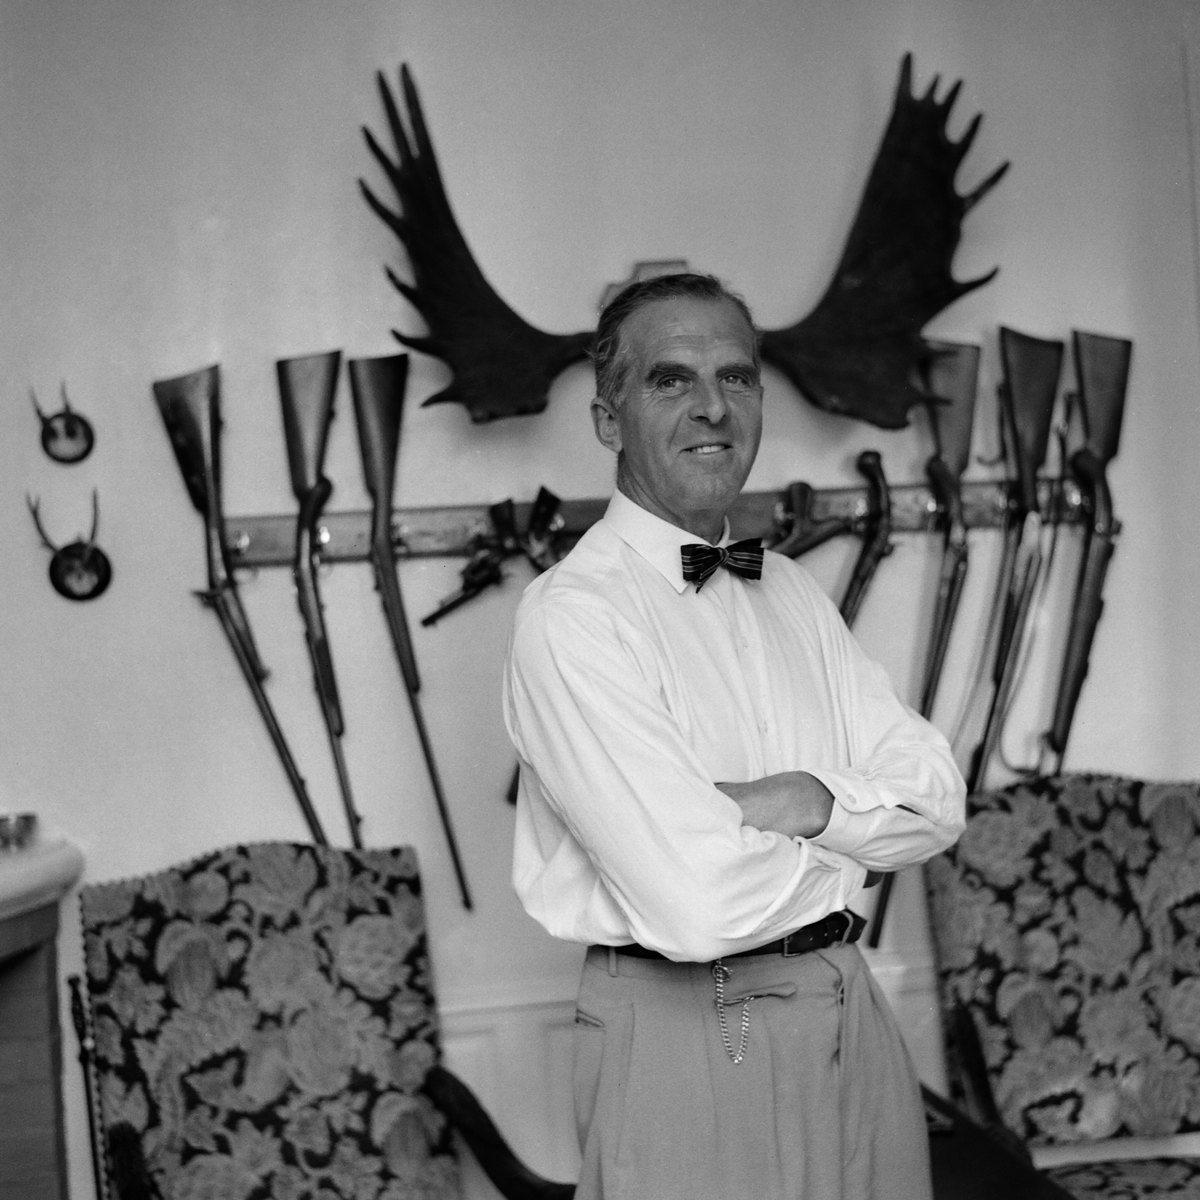 Godsägare Erik von Kantzov, Minsjö Gård. 1956